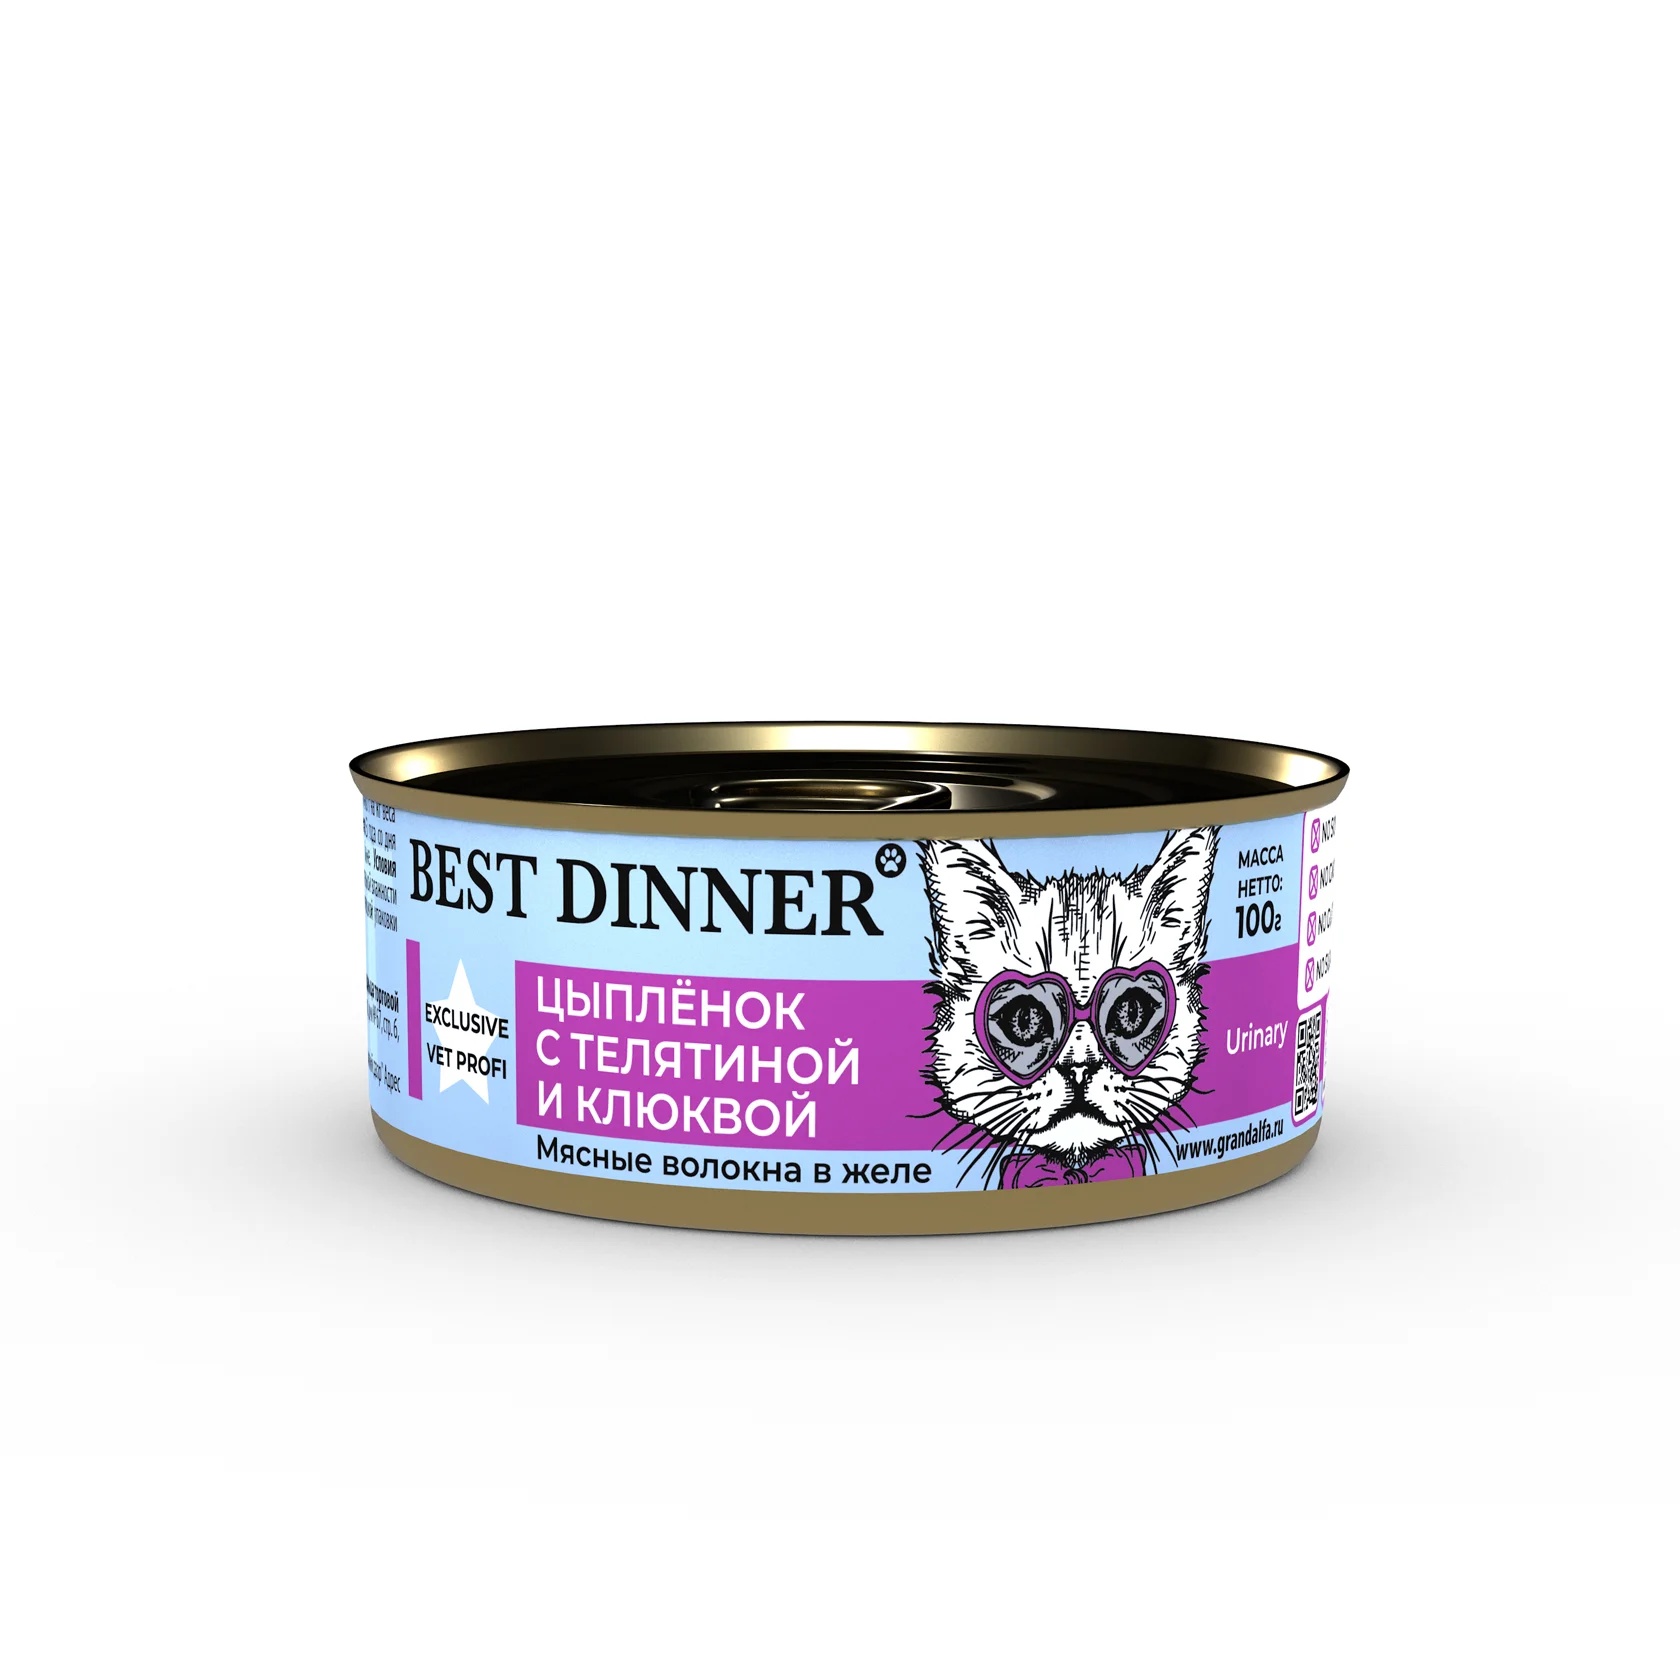 Best Dinner Exclusive Vet Profi Urinary Цыпленок/Телятина/клюква паштет конс для кошек 100 г 1